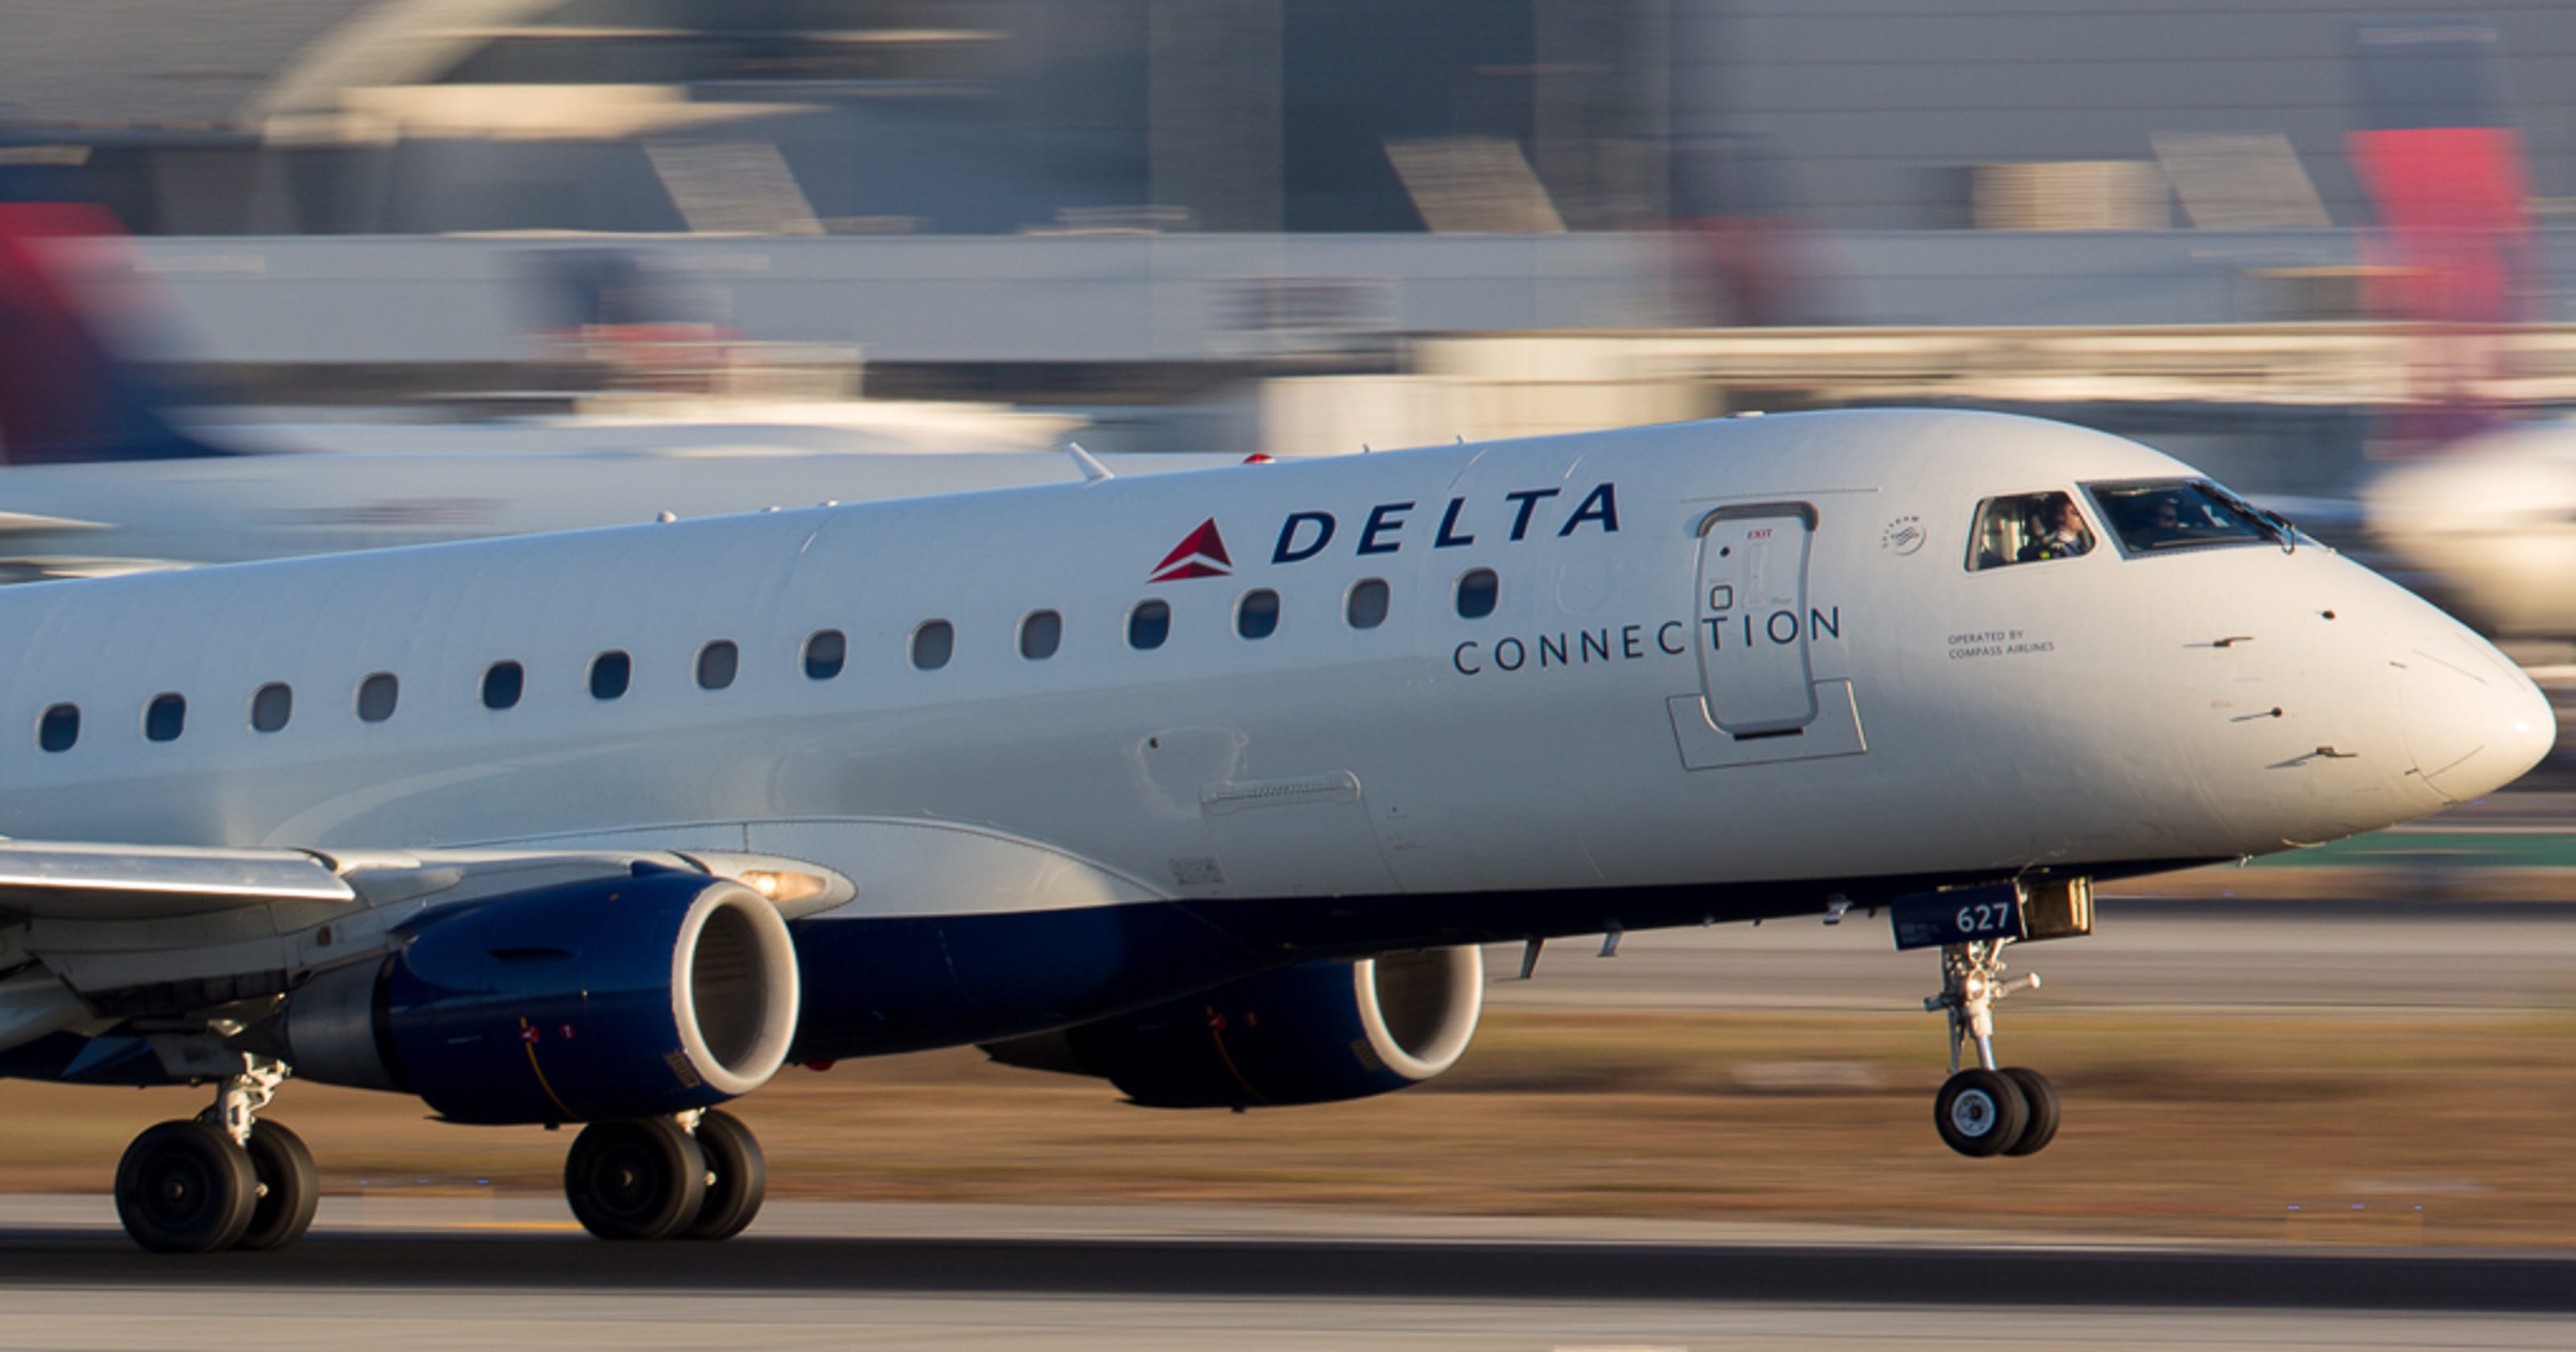 Delta flight turbulence injures 5, aircraft makes emergency landing